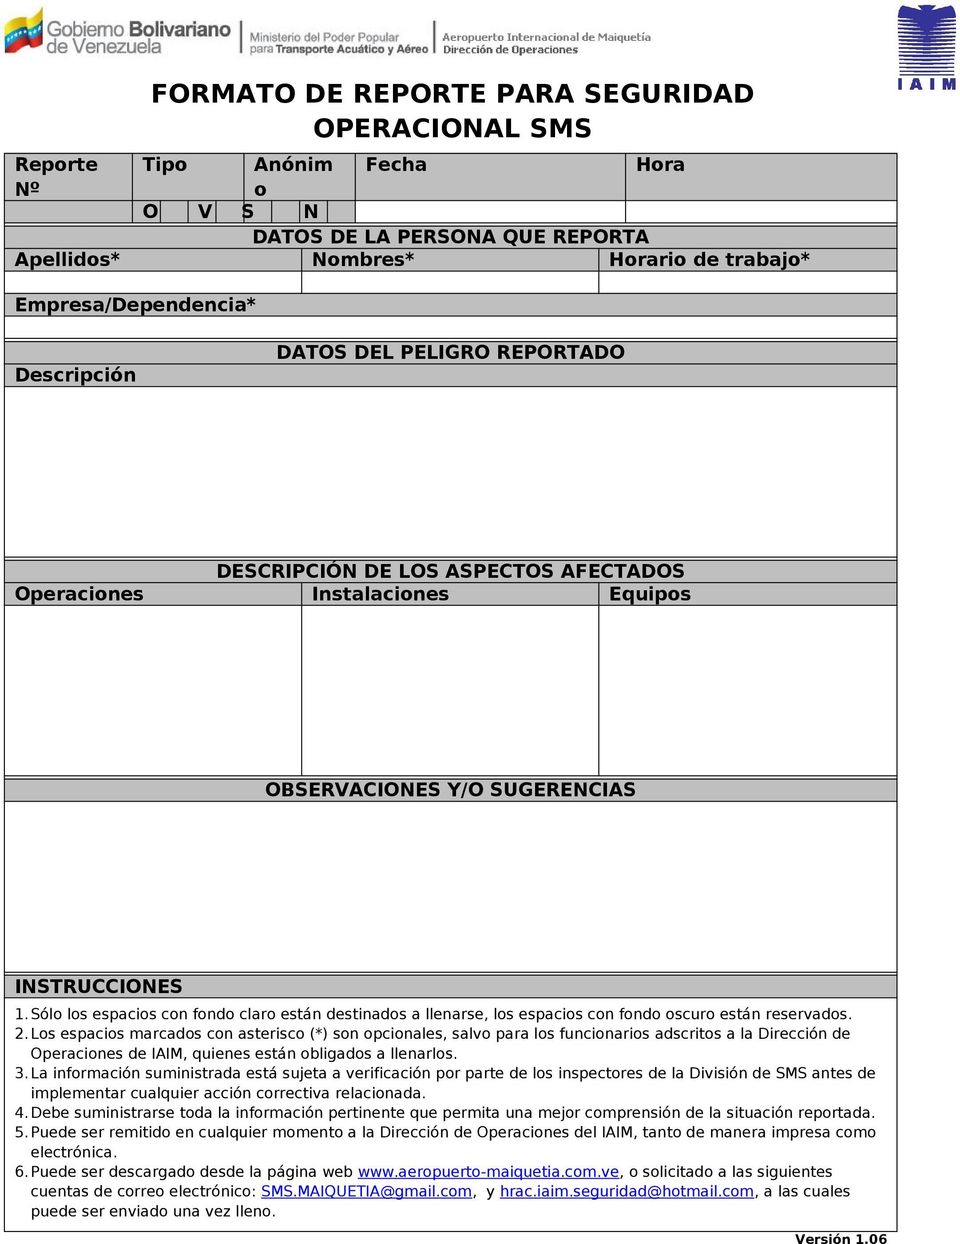 FORMATO DE REPORTE PARA SEGURIDAD OPERACIONAL SMS - PDF Free Download